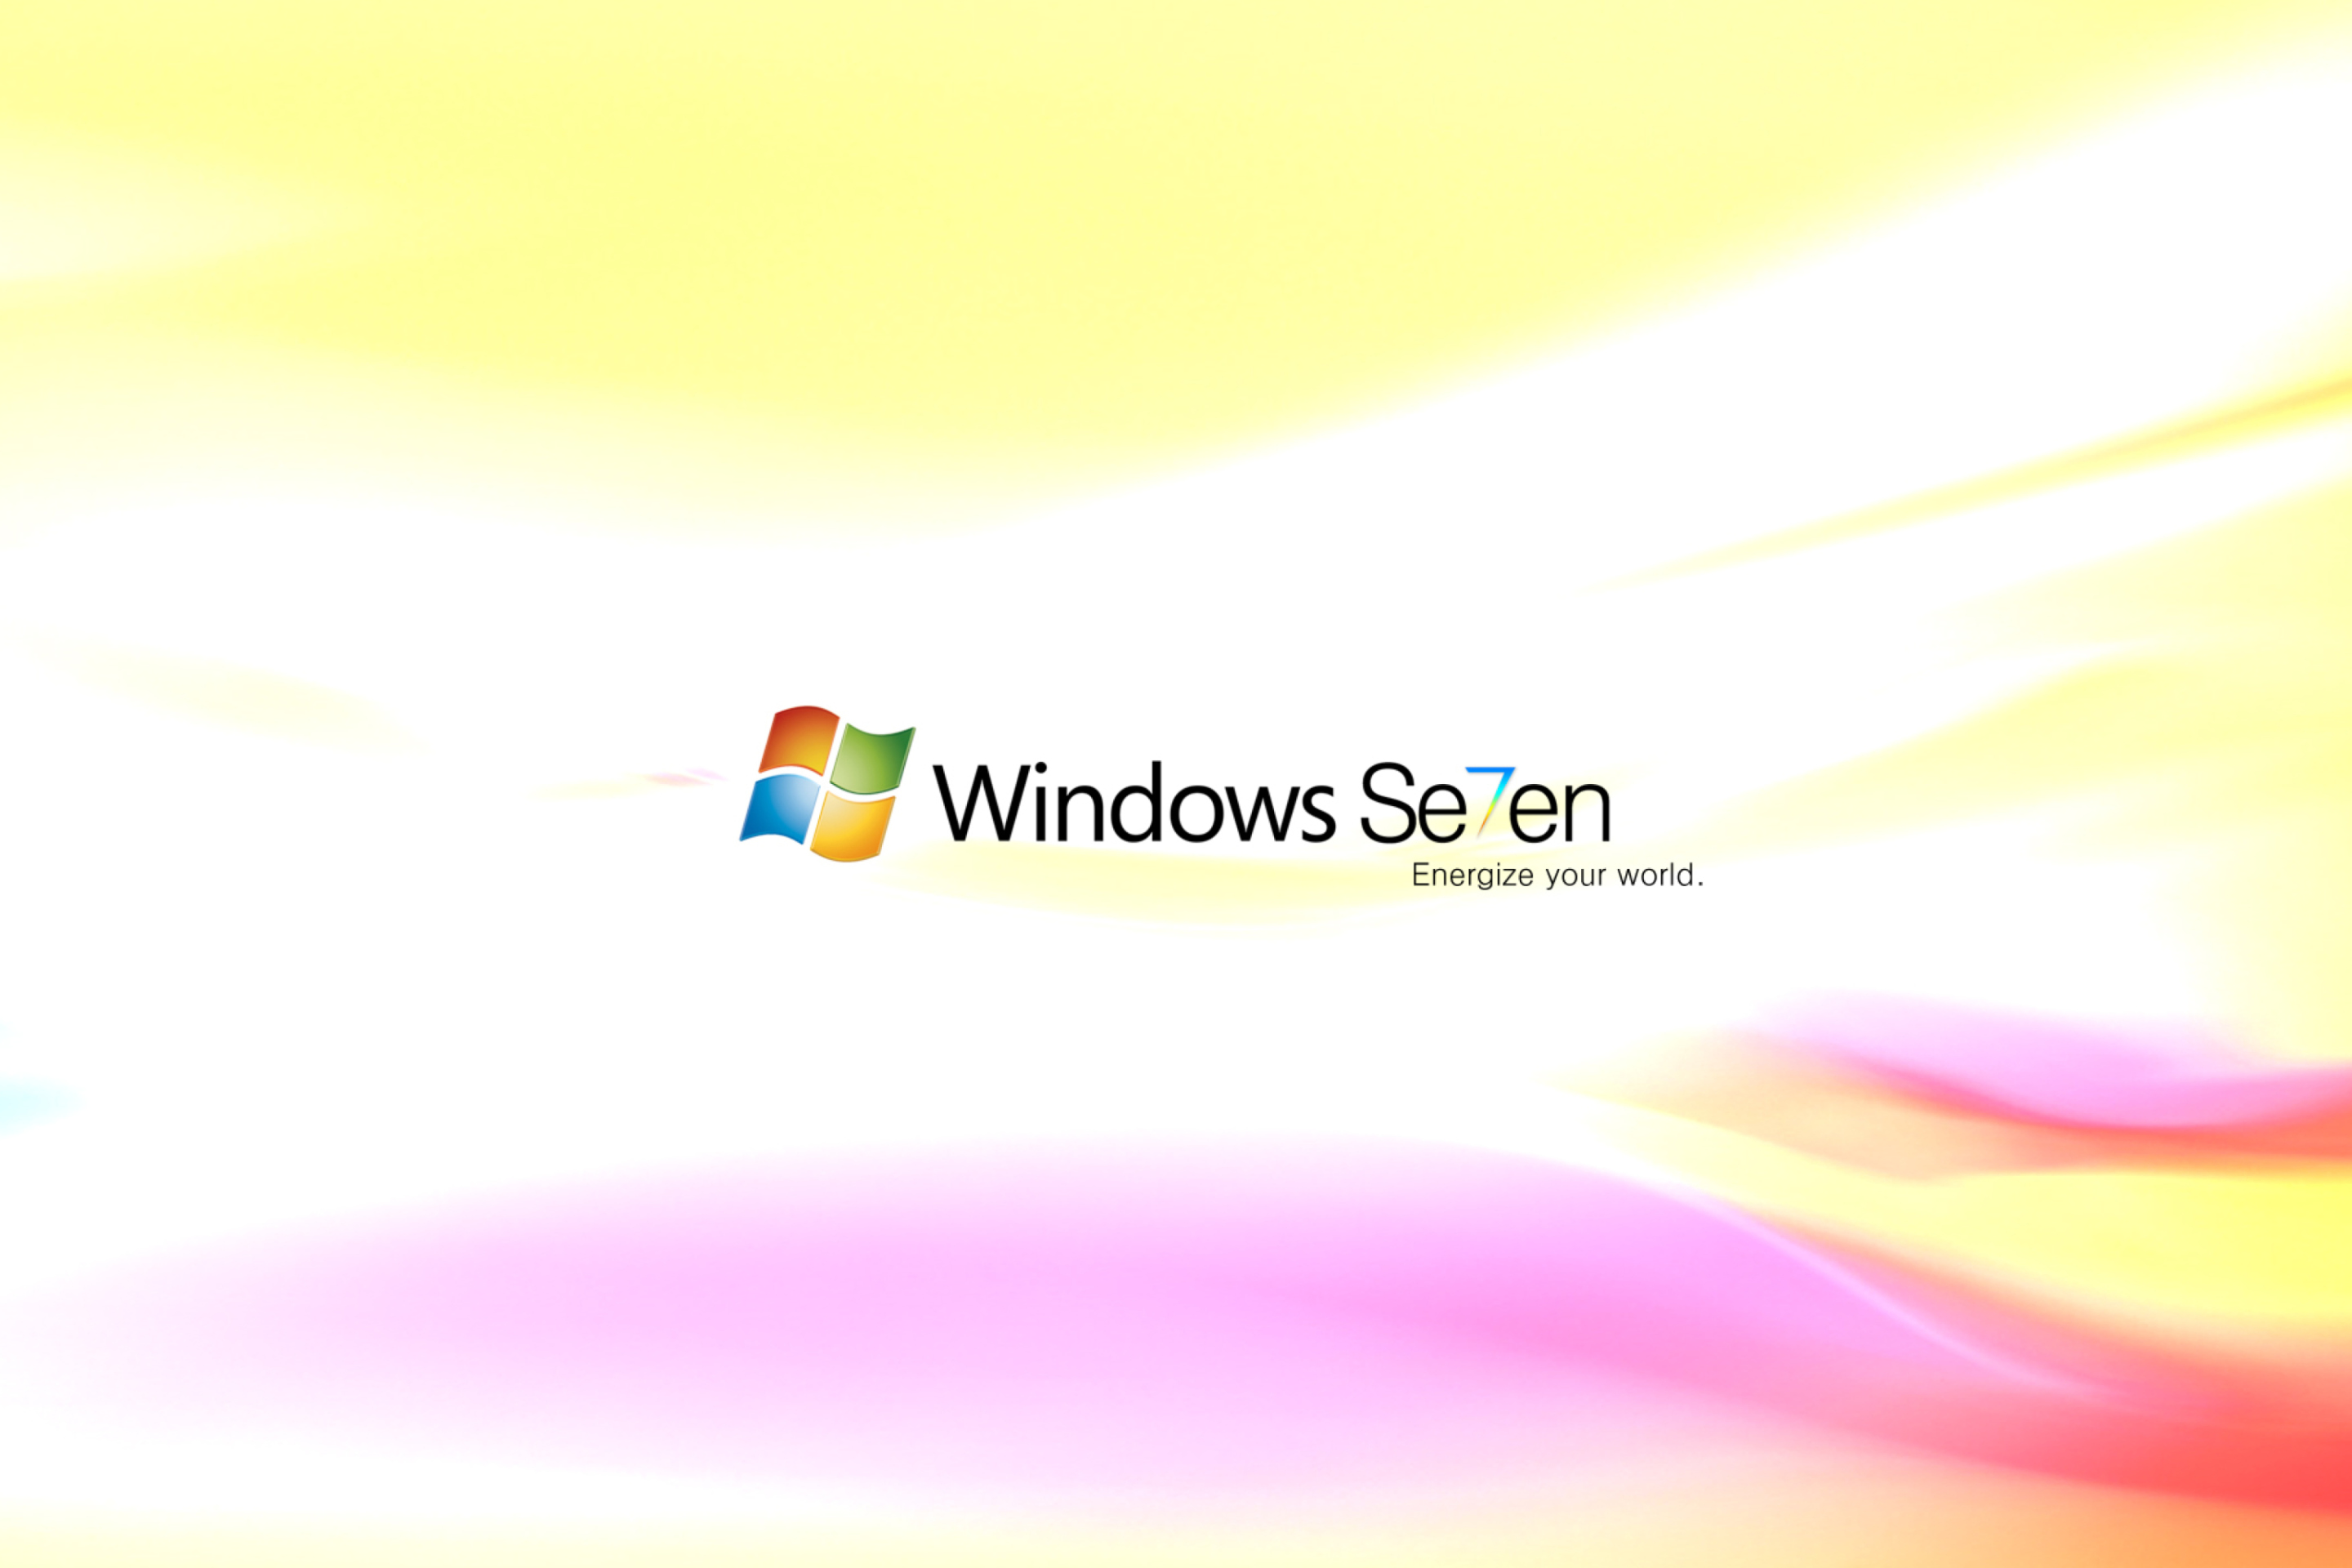 Das Windows Se7en Wallpaper 2880x1920